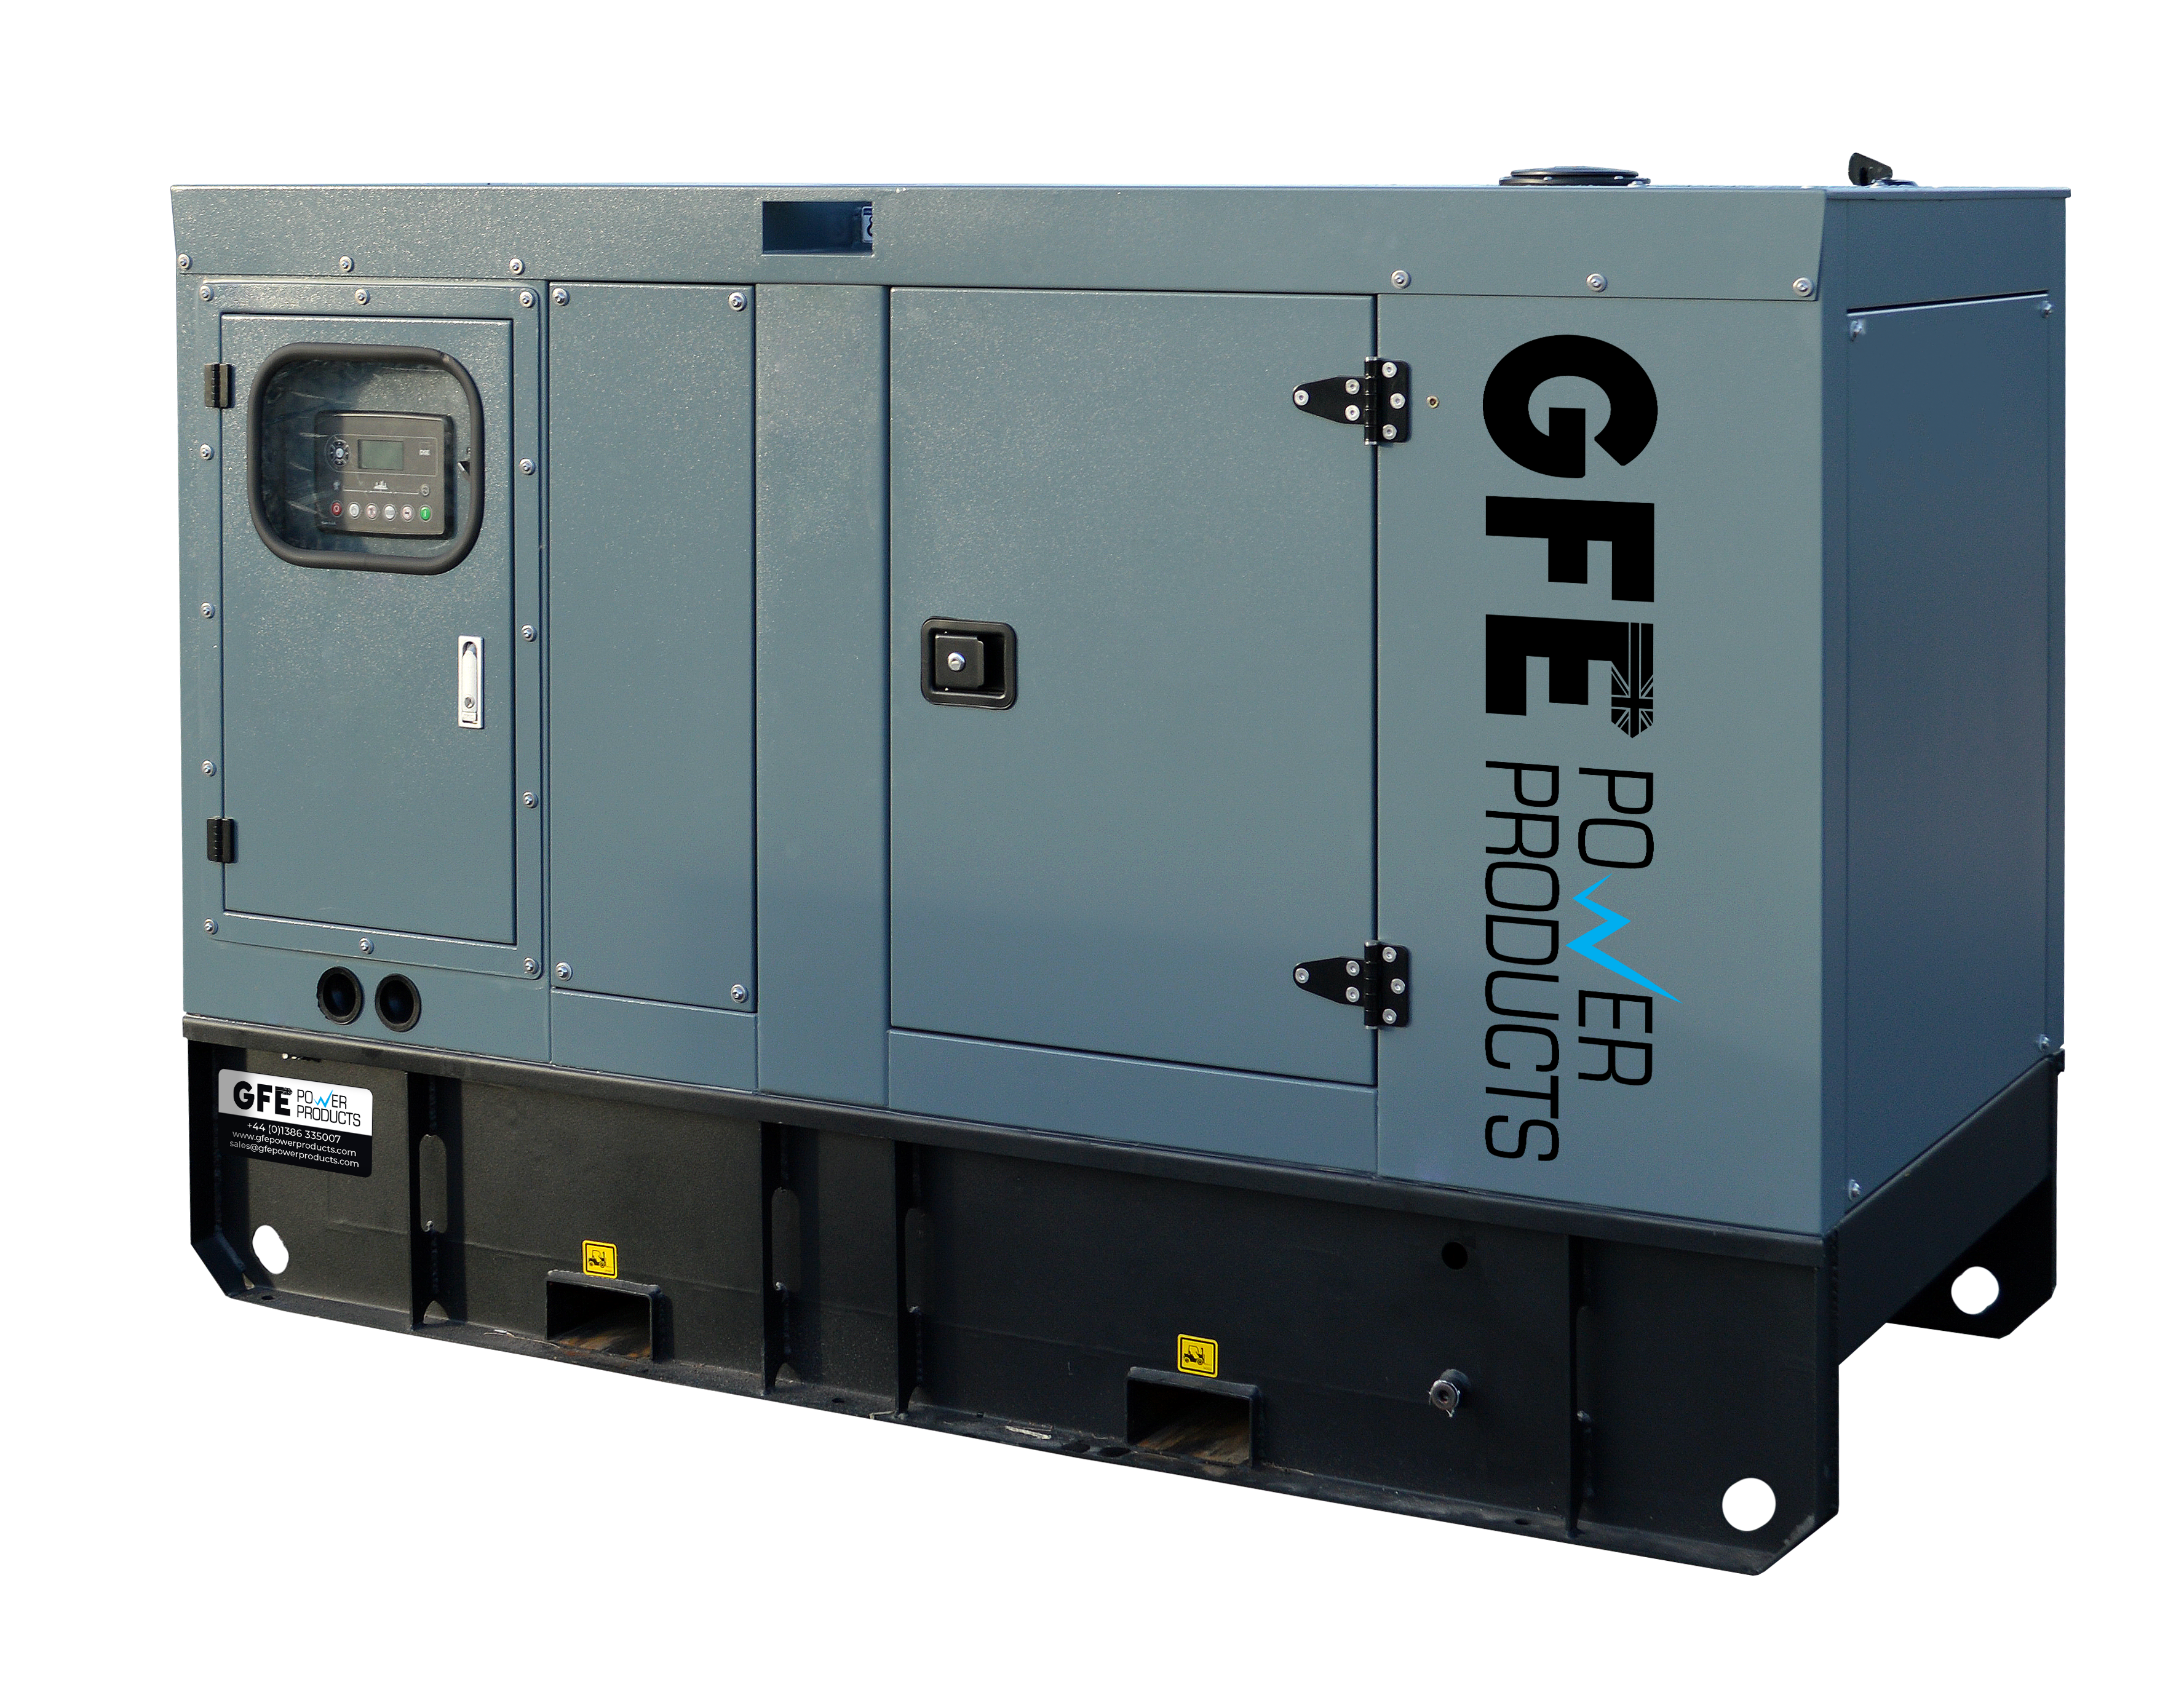 Cummins 55kVA Diesel Generator - GFE60CSC